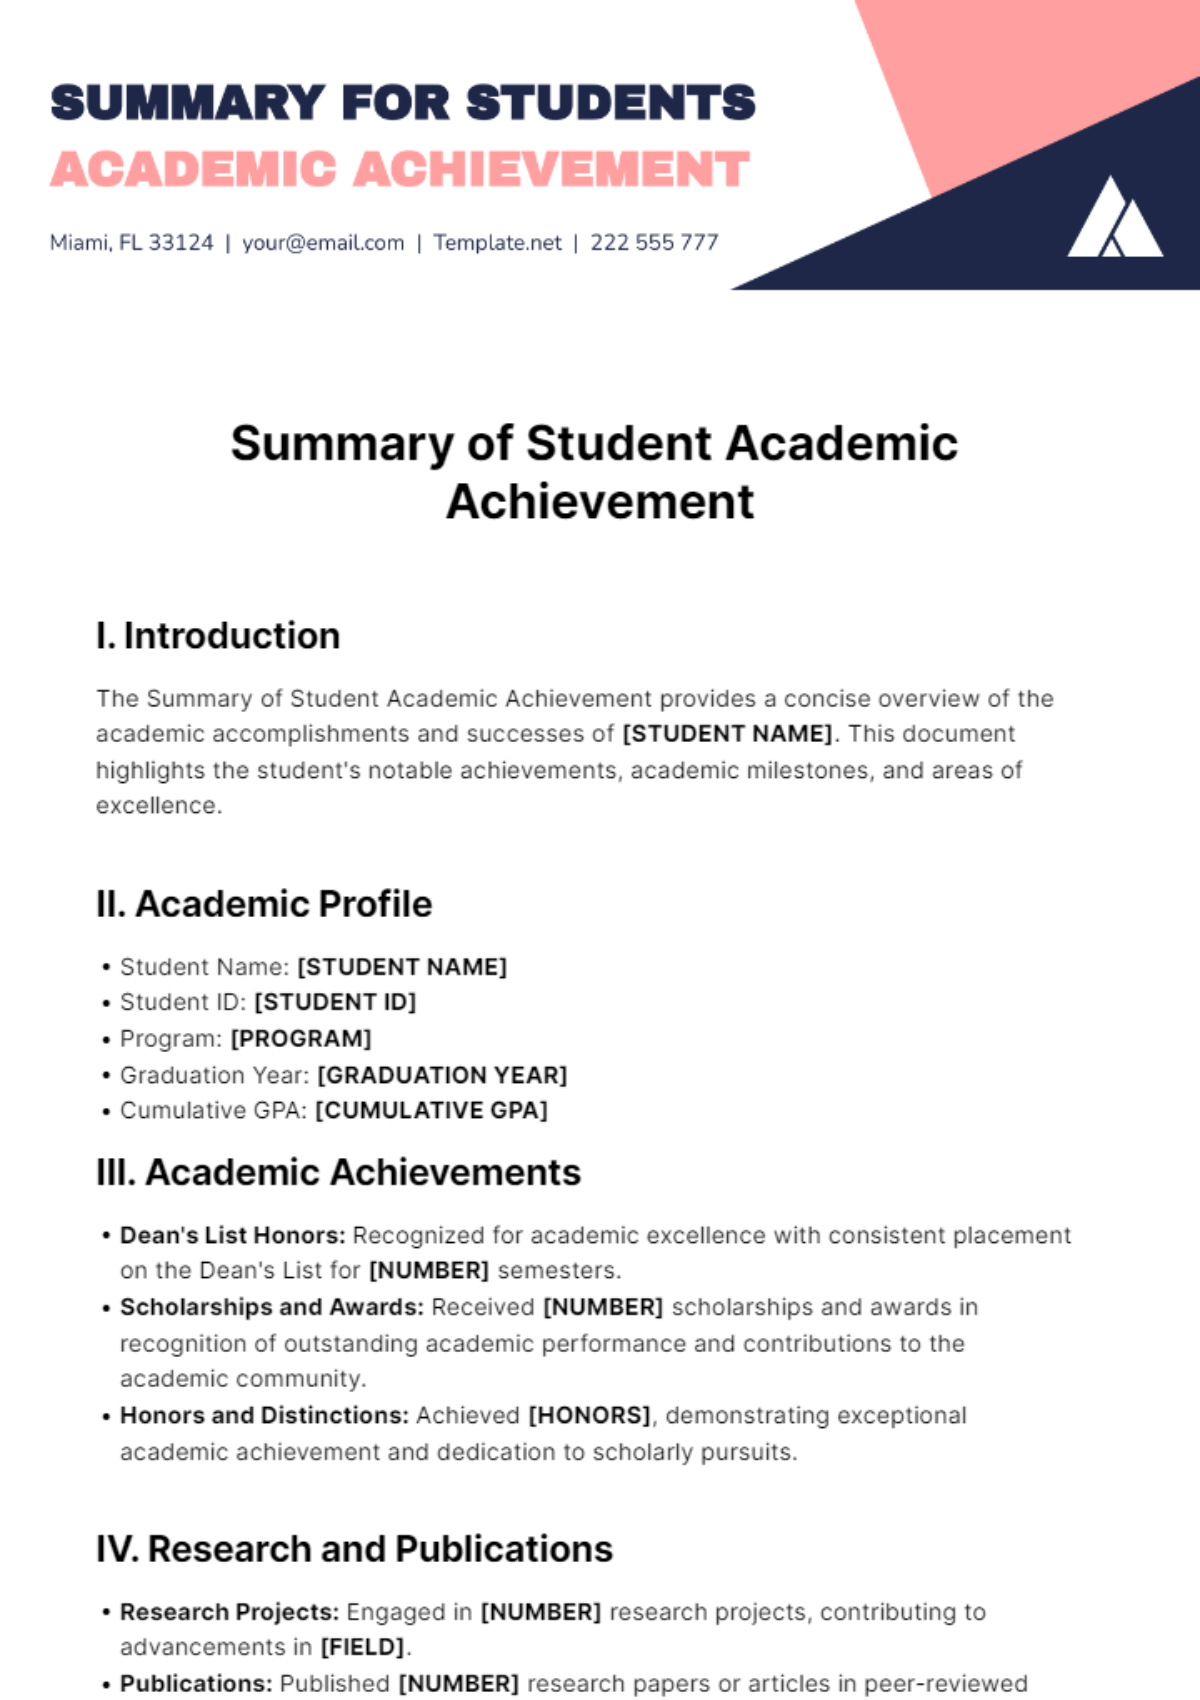 Summary of Student Academic Achievement Template